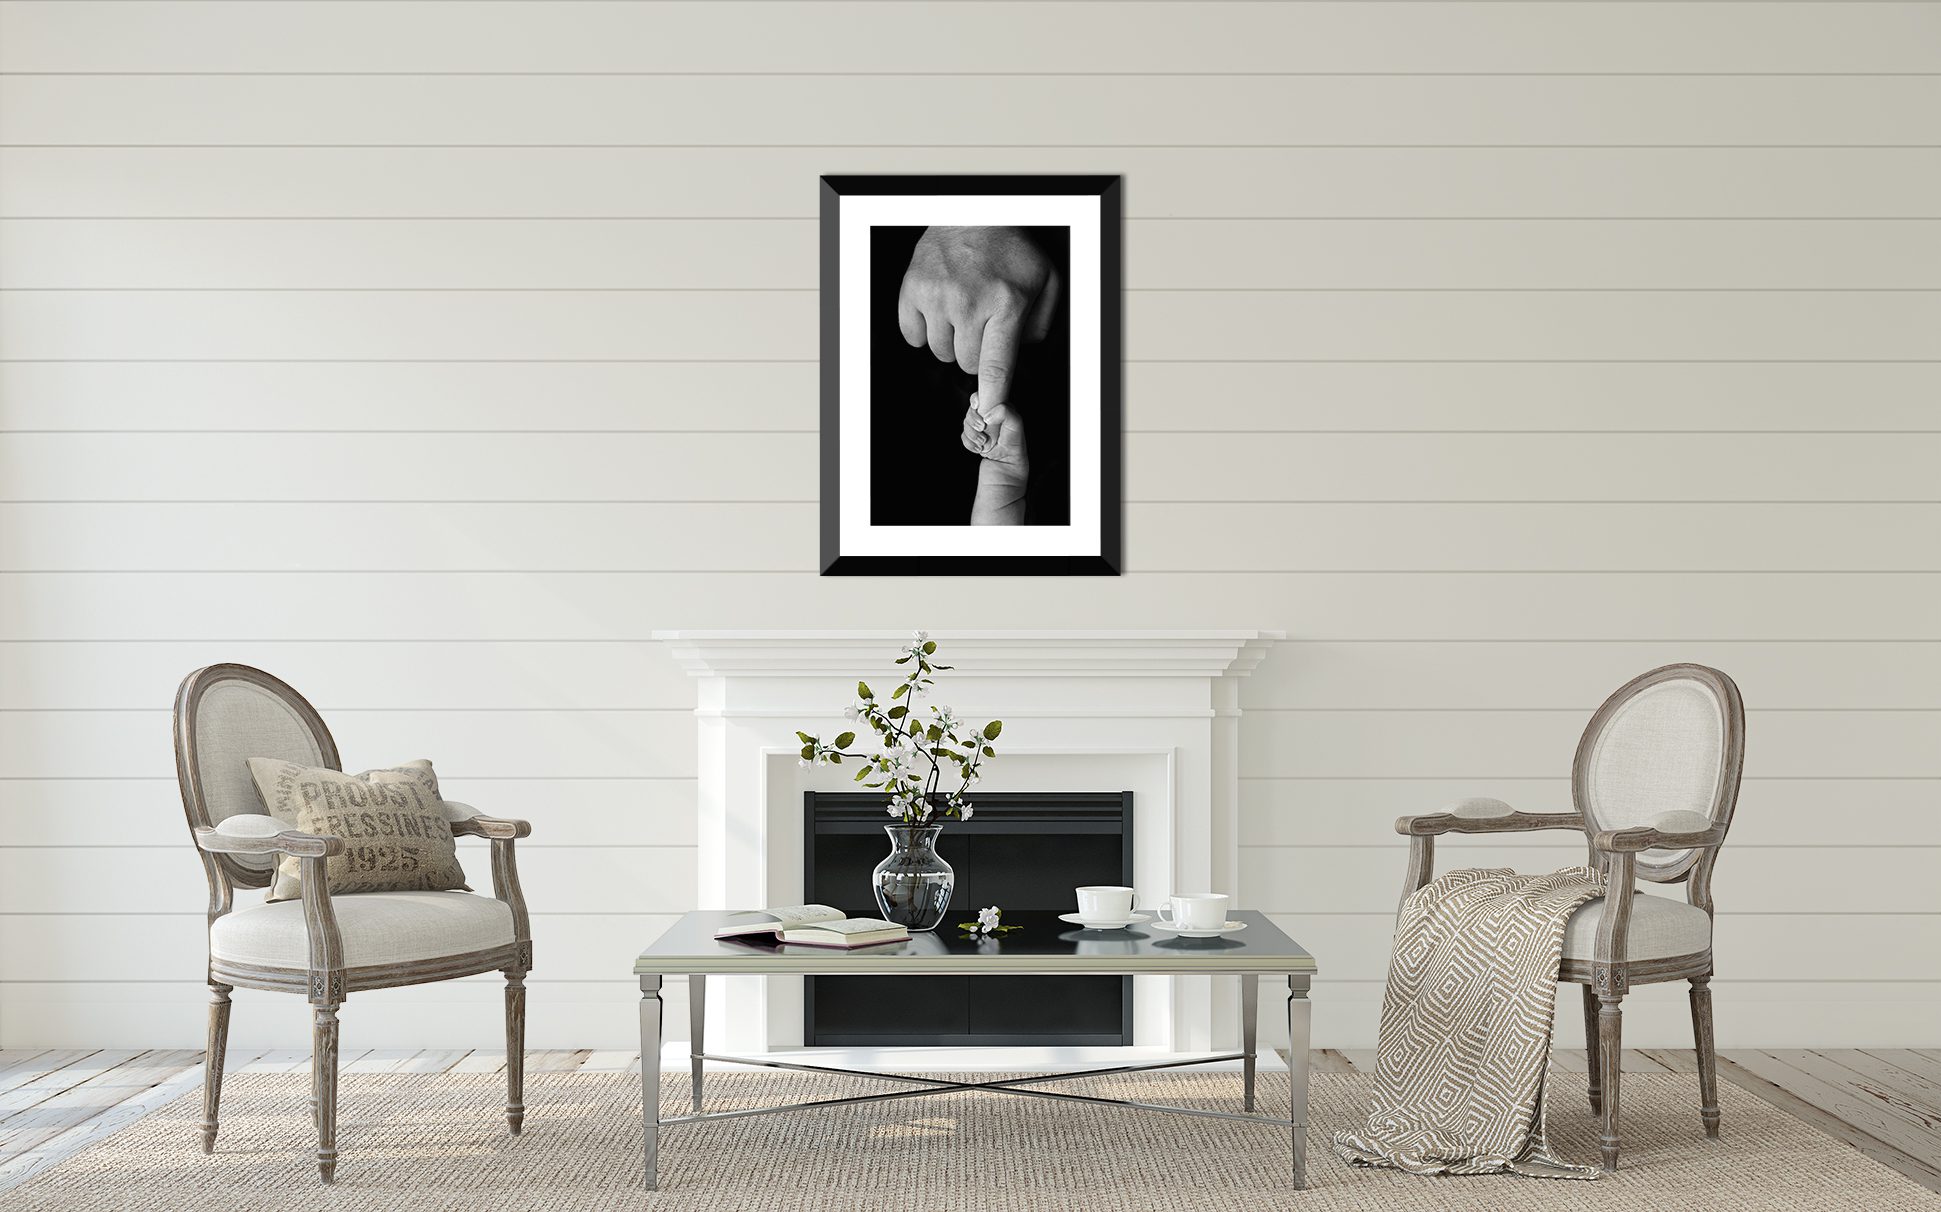 Huntsville newborn photography displayed above a fireplace